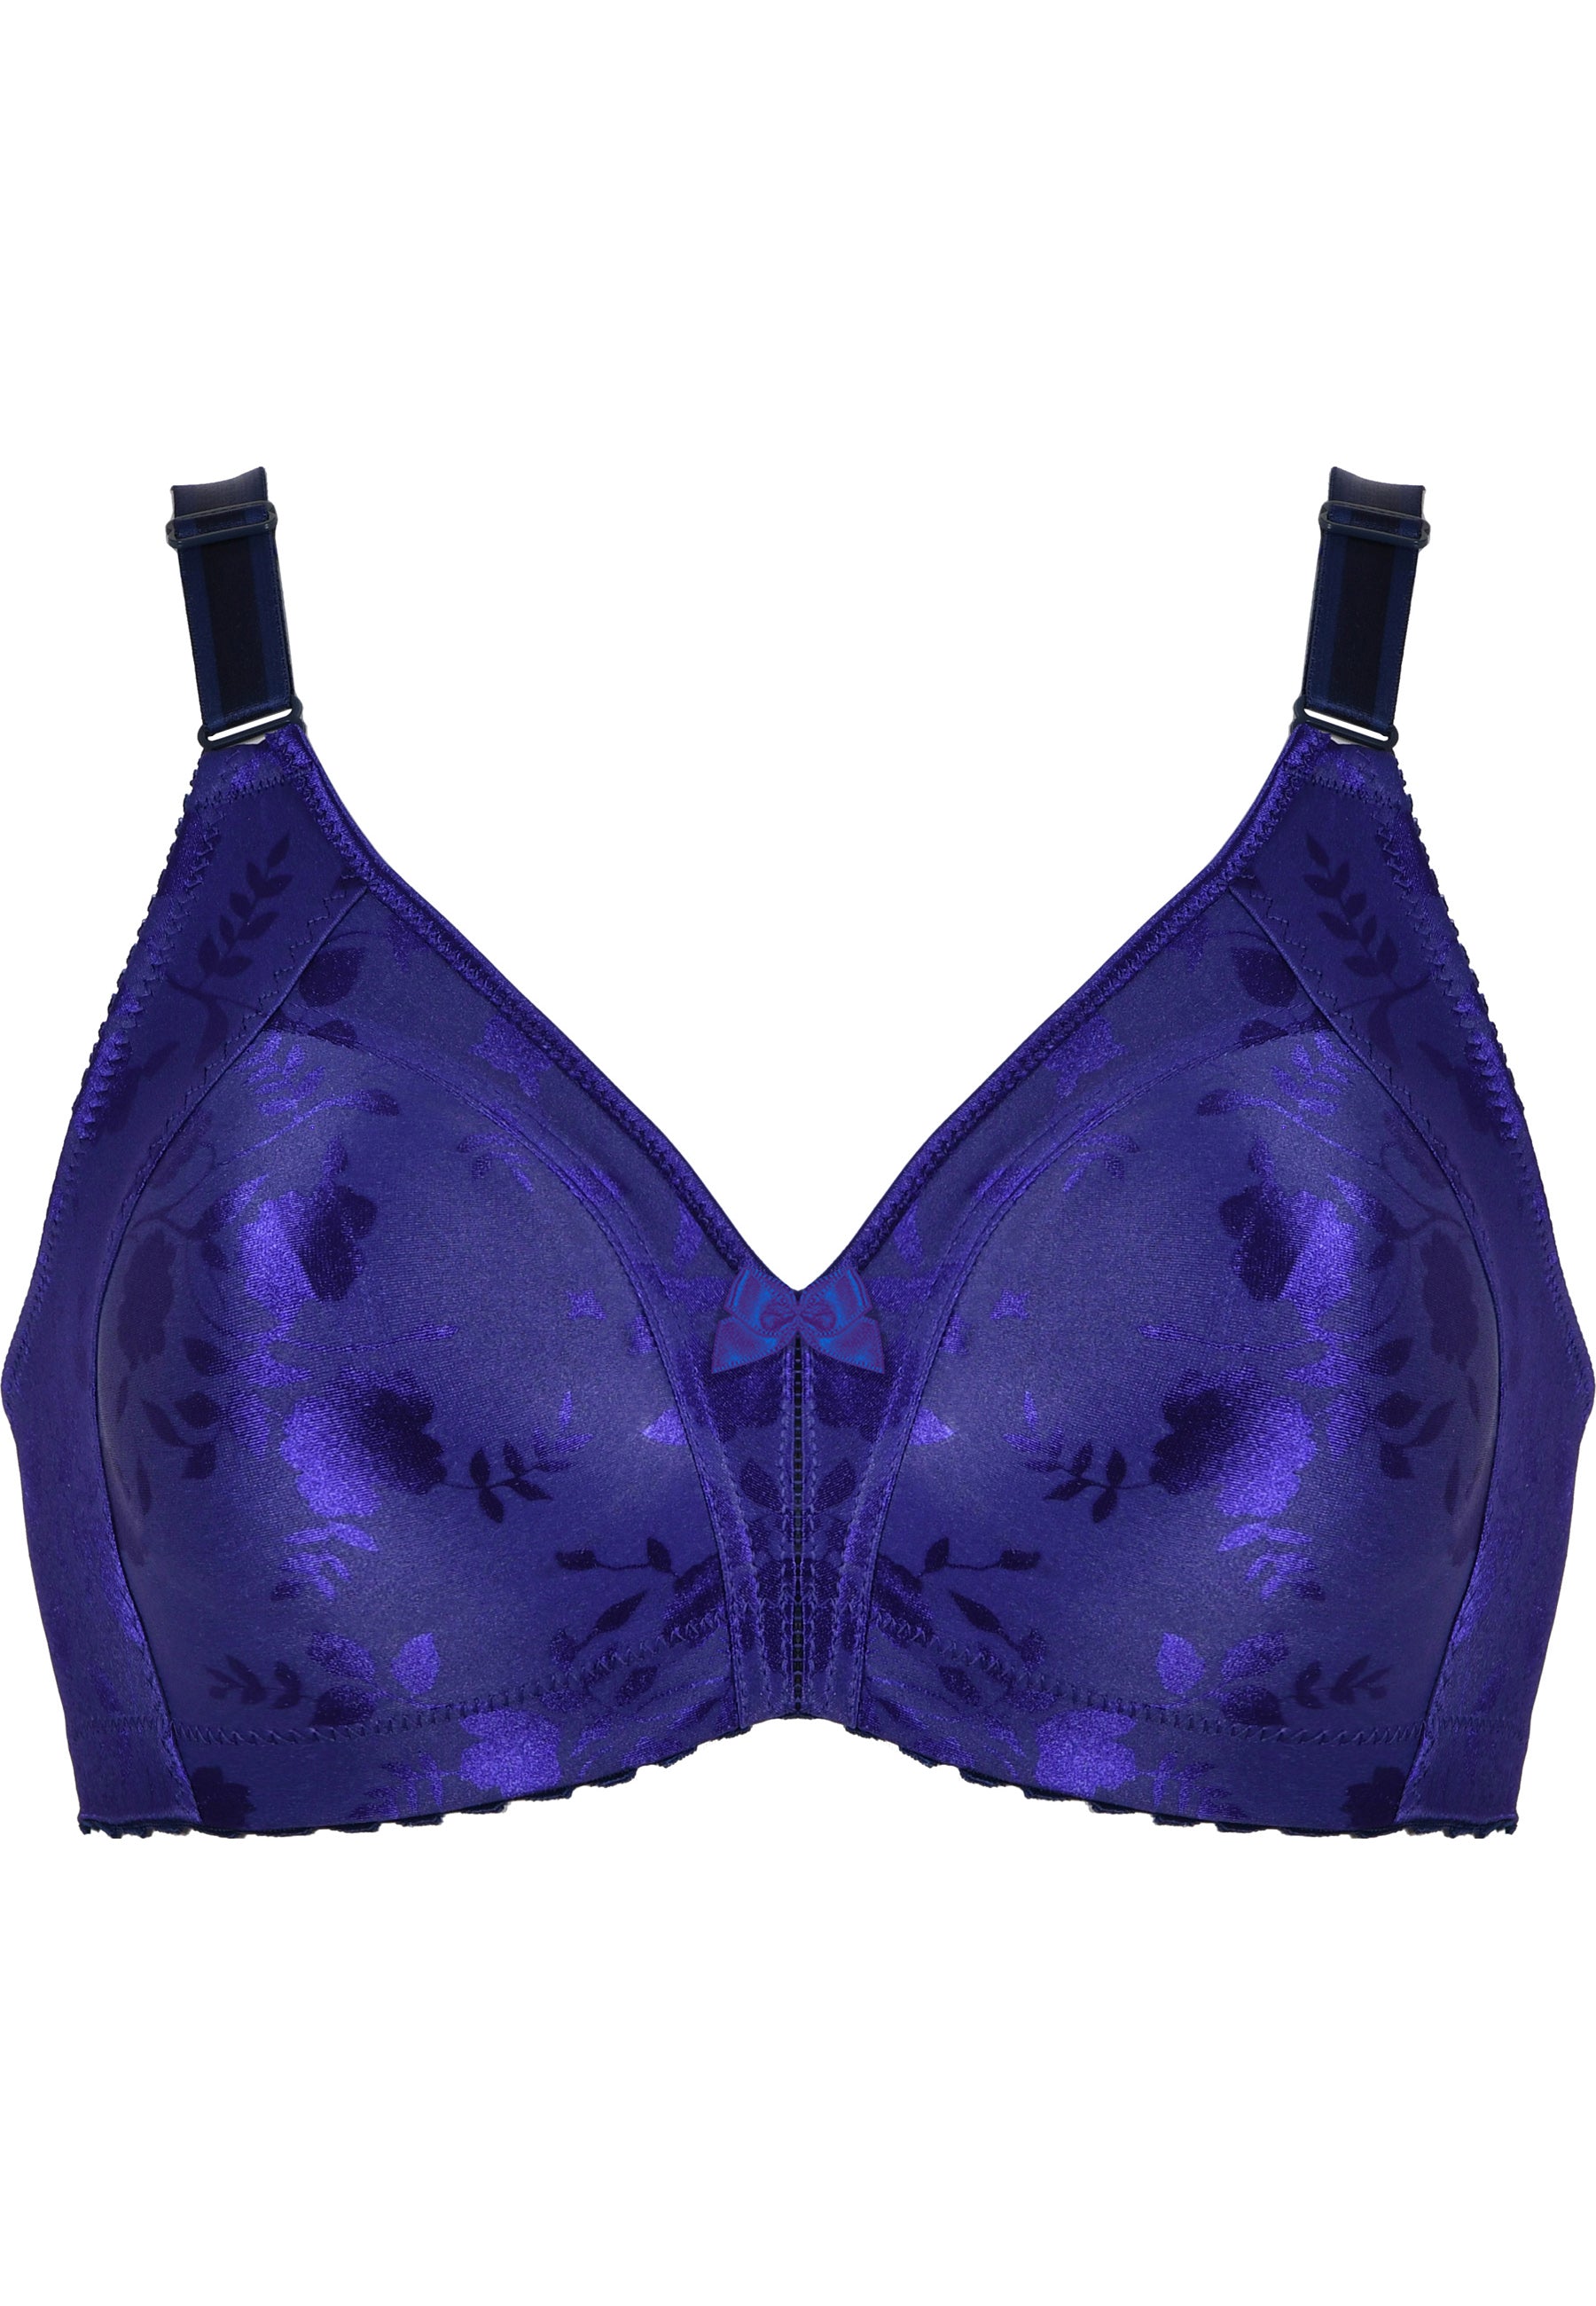 Minimizer soft bra in floral pattern - Galaxy Violet